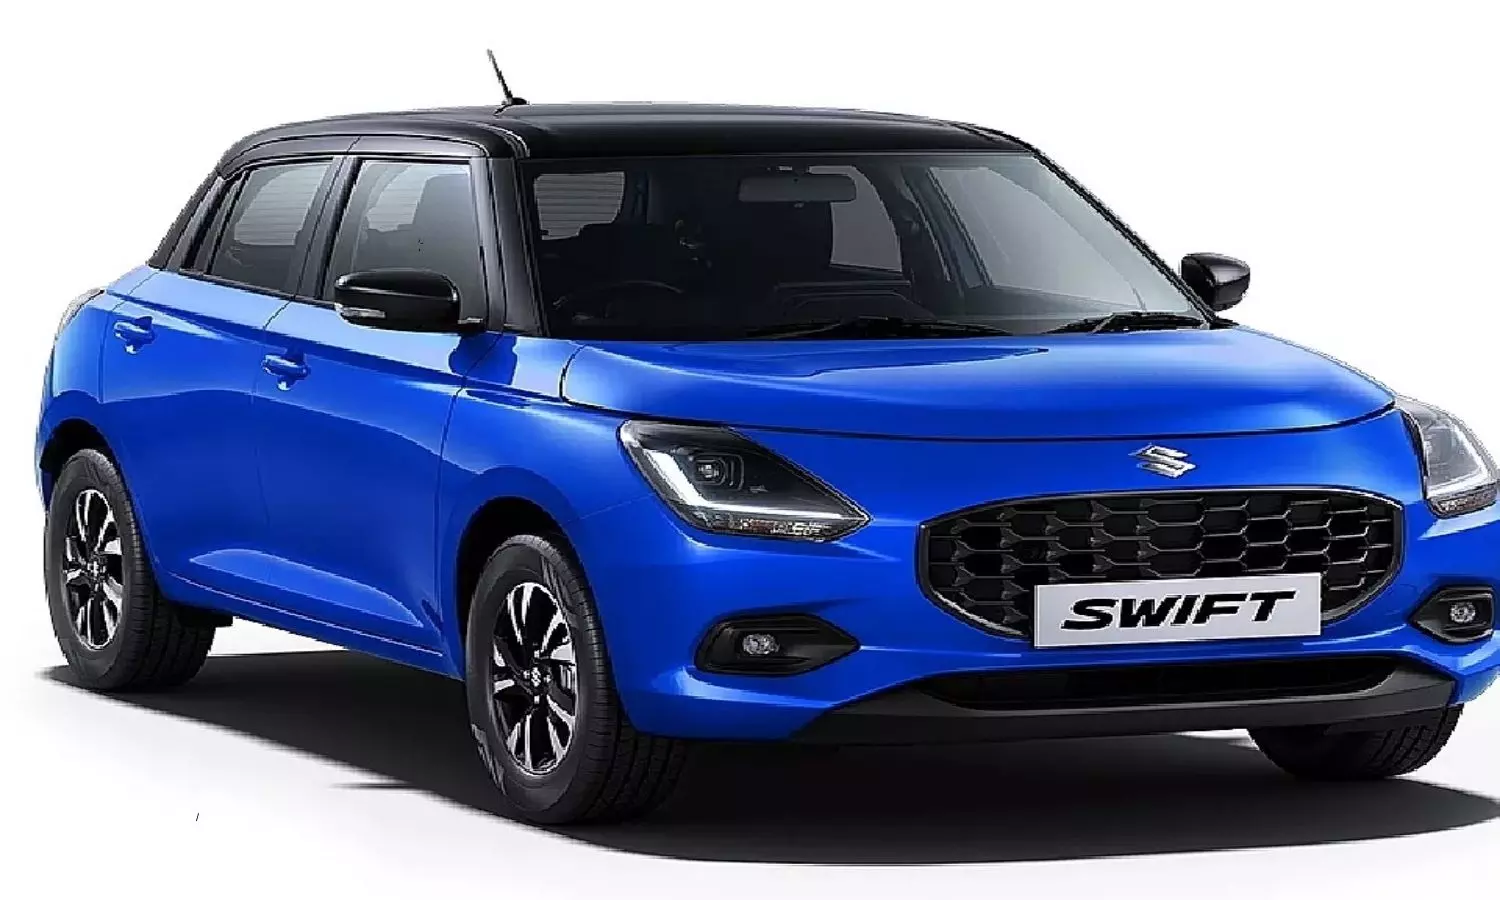 Maruti Suzuki swift hits 30 lakh units sales check price and features